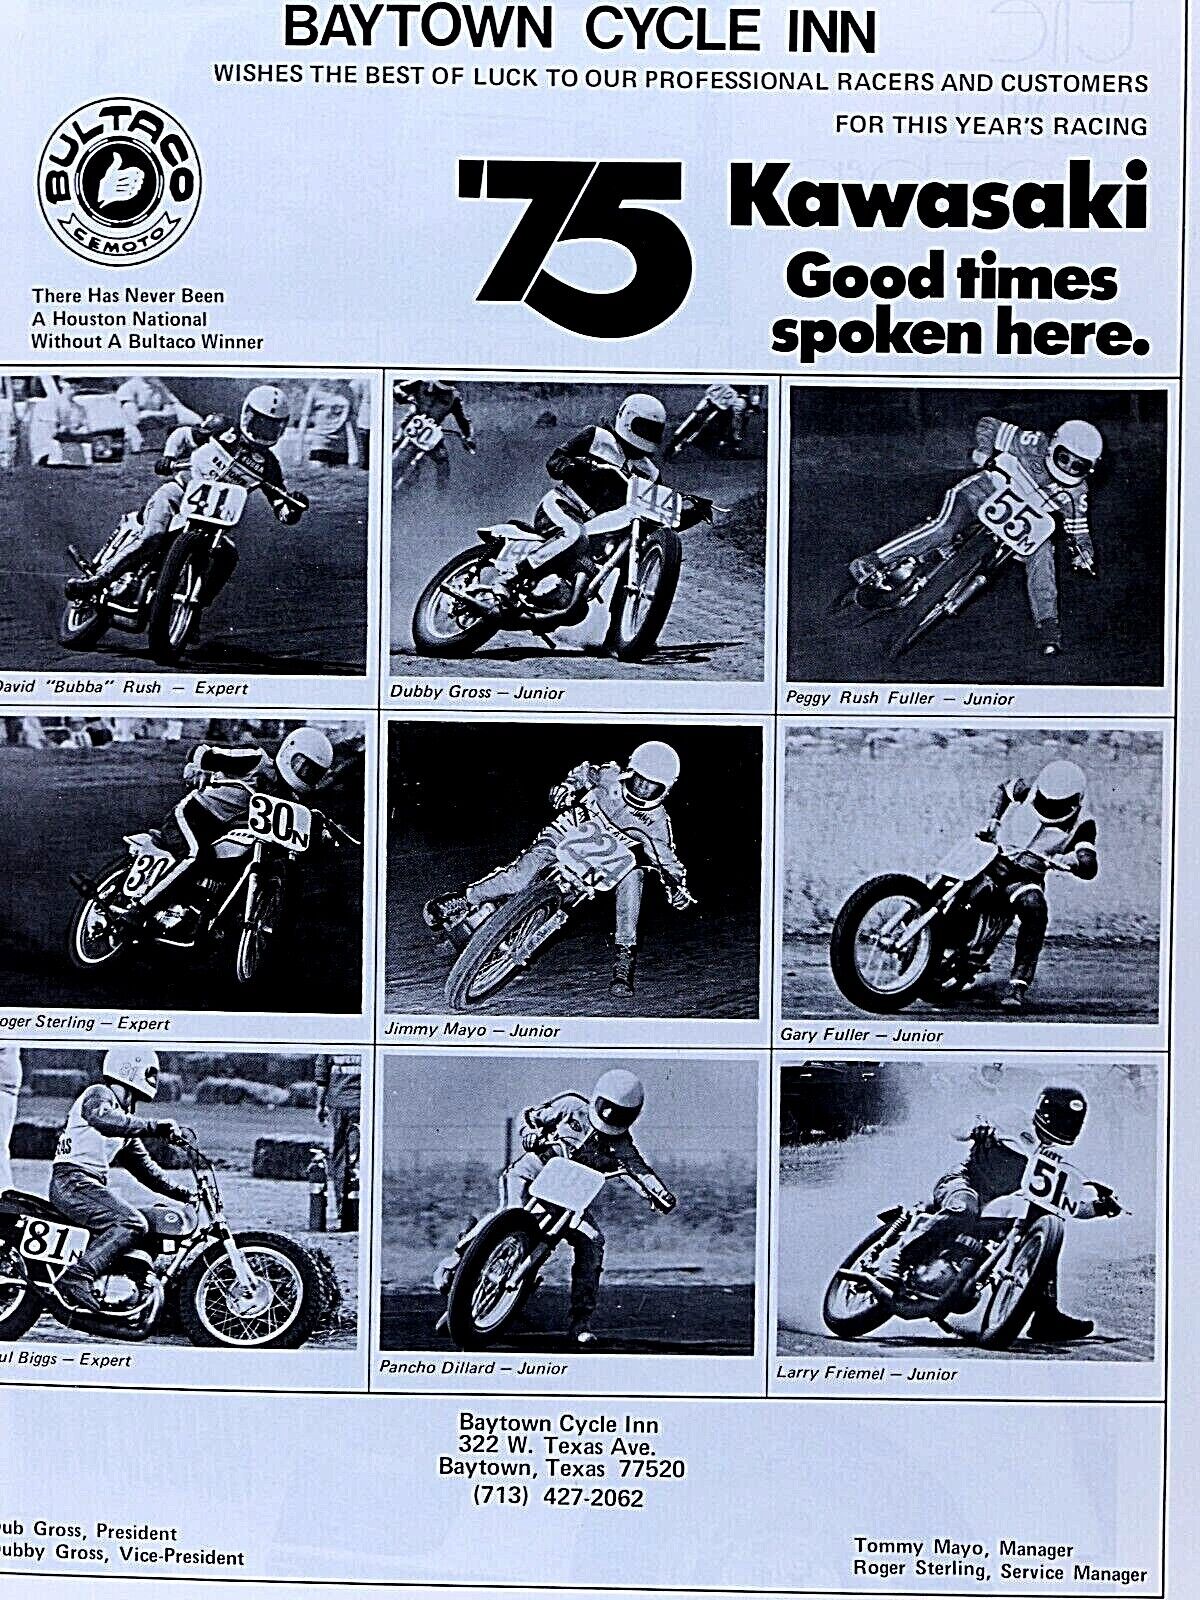 1975 Kawasaki VTG Baytown Cycle Inn Houston National Bultaco Original Print Ad